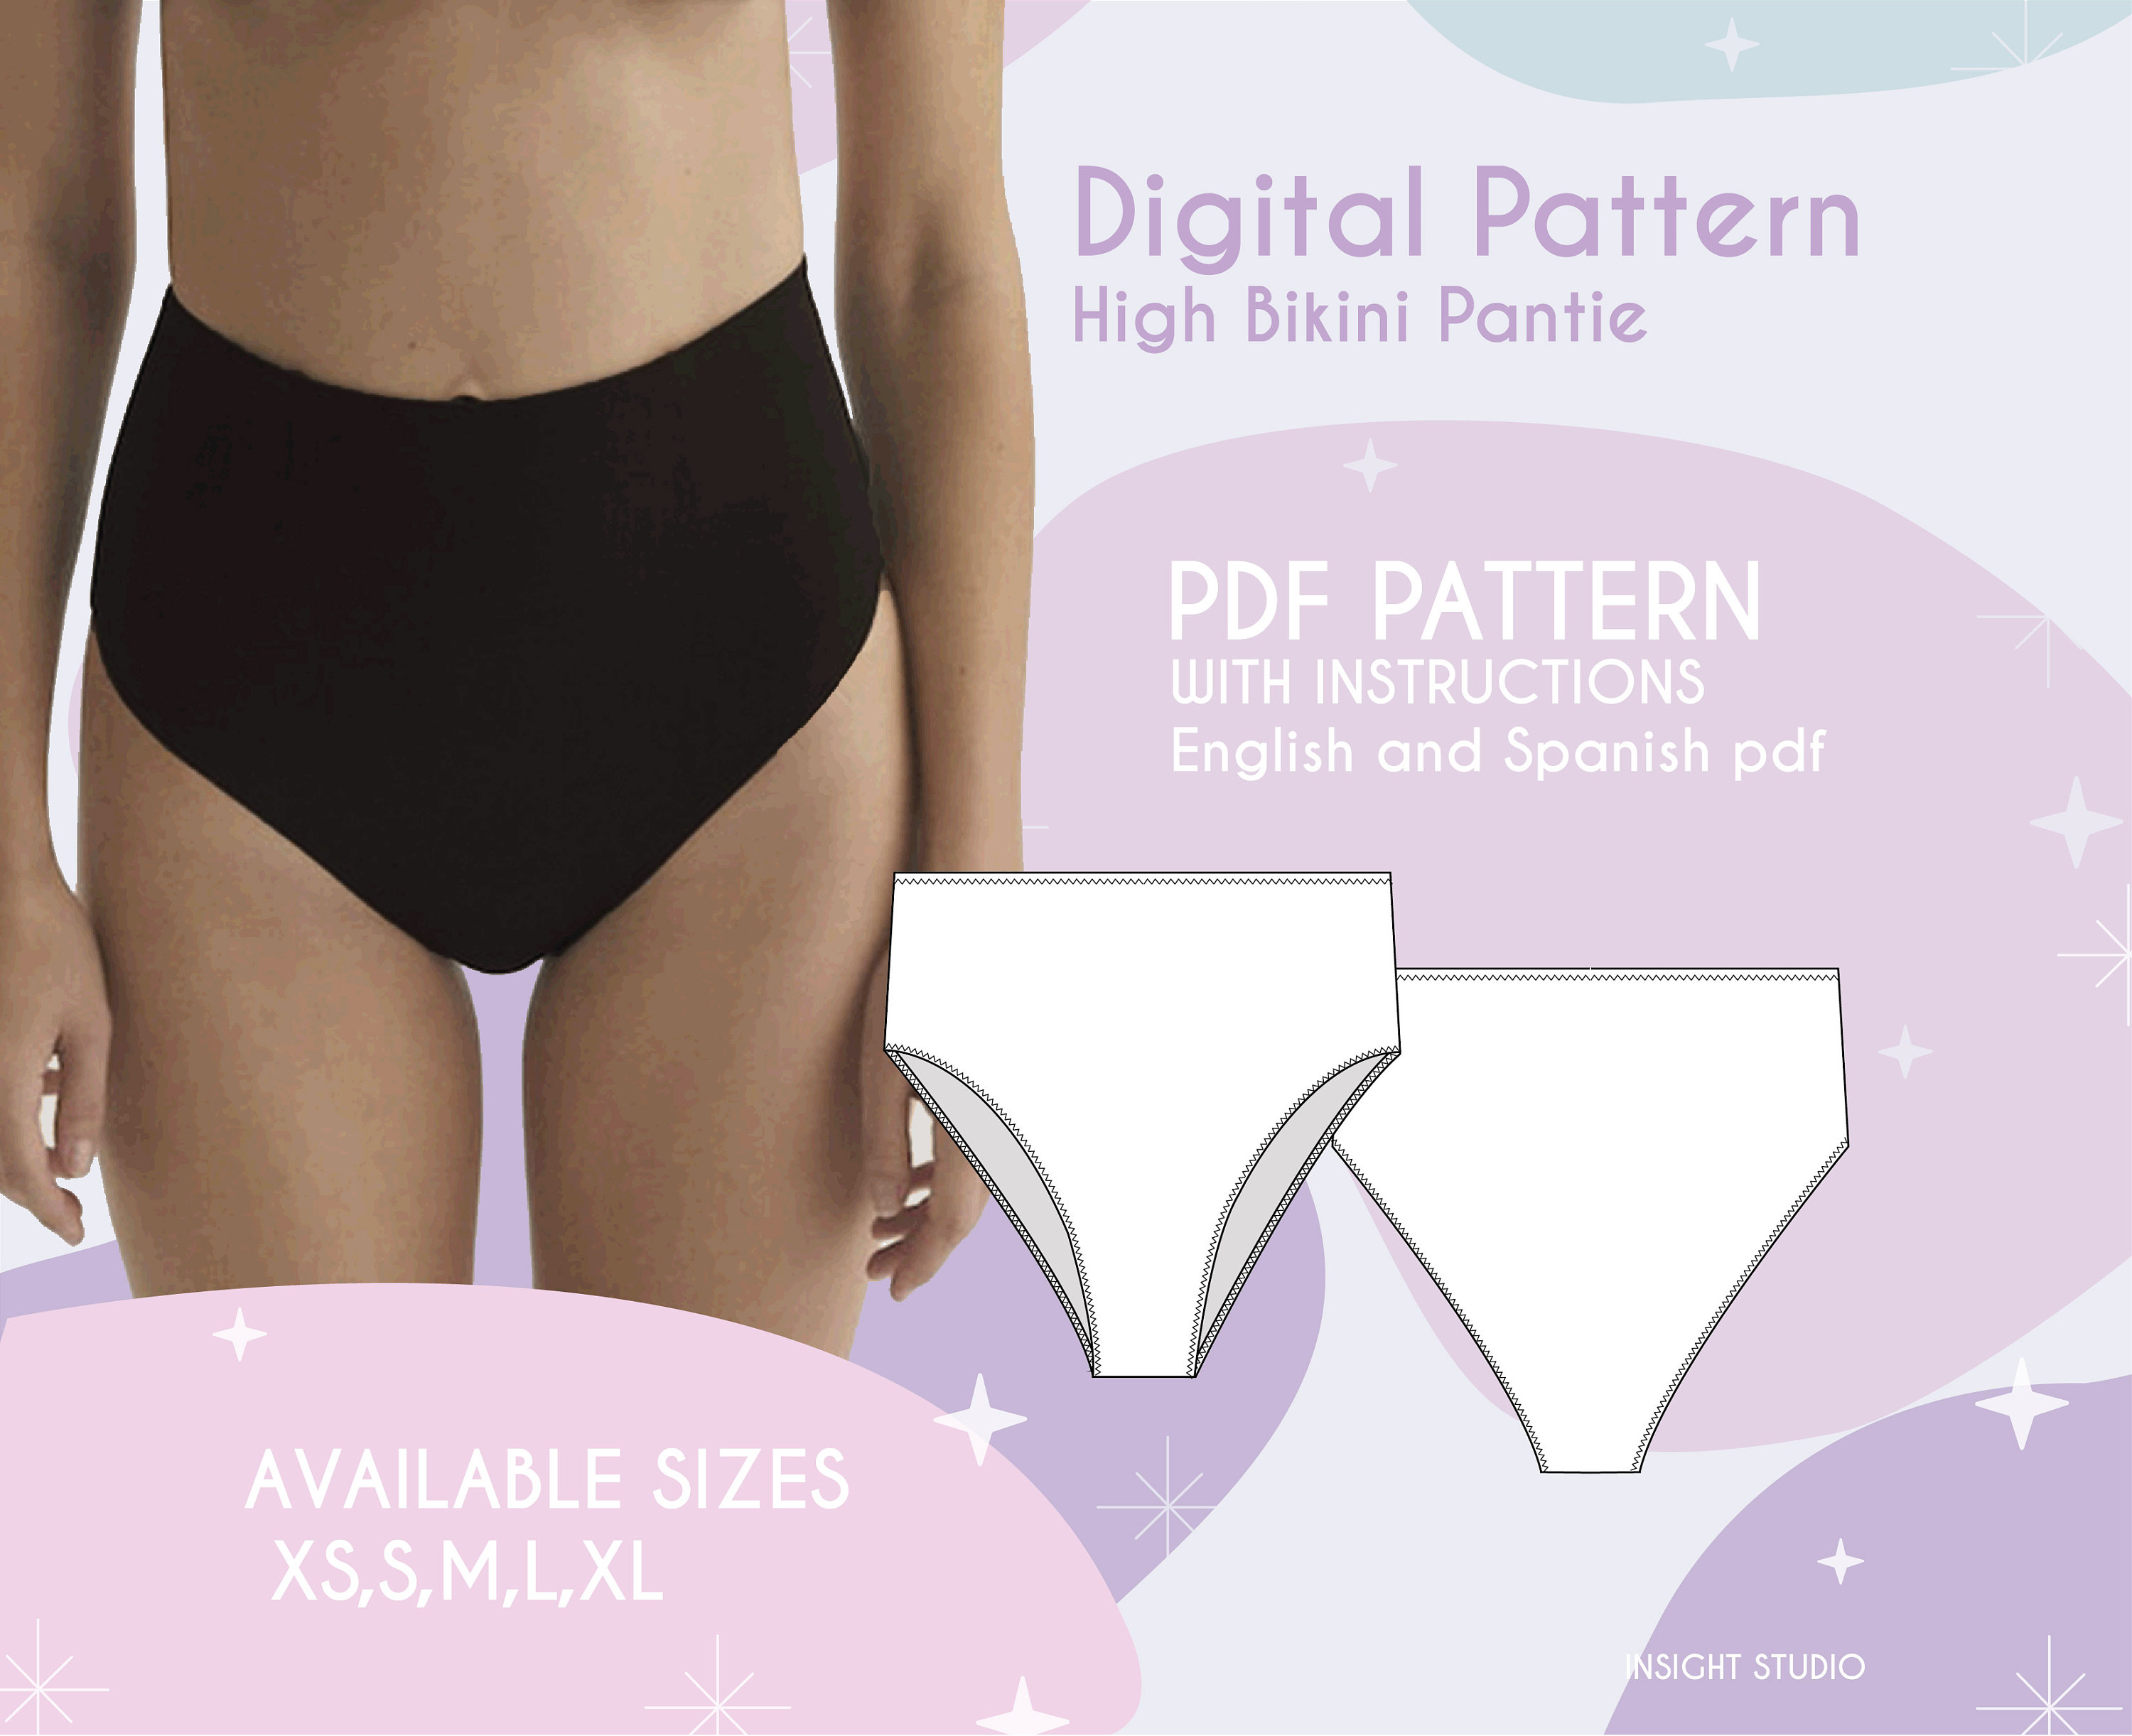 Women's Thong Underwear Panties | Emprella Certified | S M L XL | Lot of  3-10 